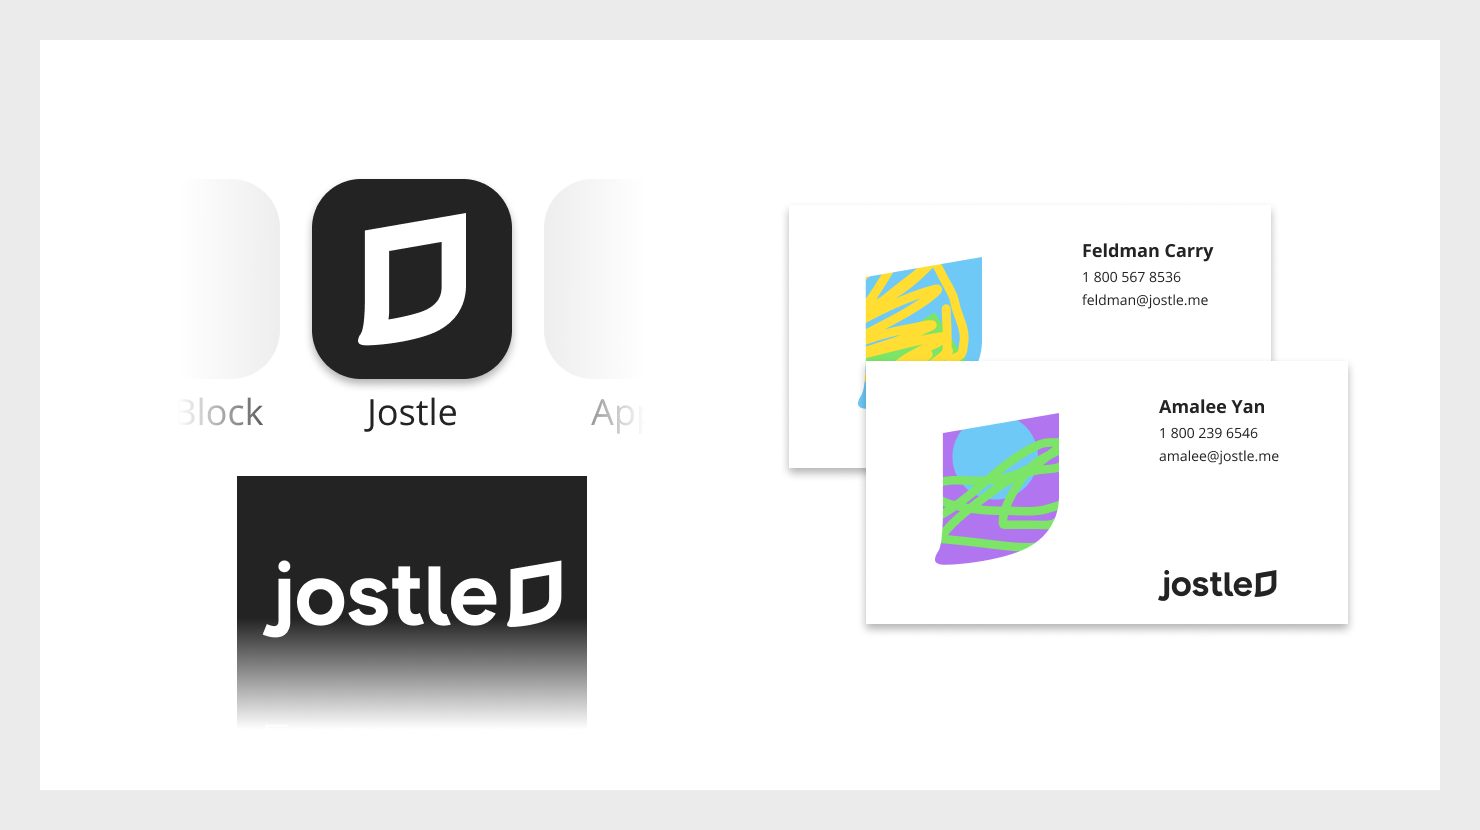 jostle rebrand logo assets